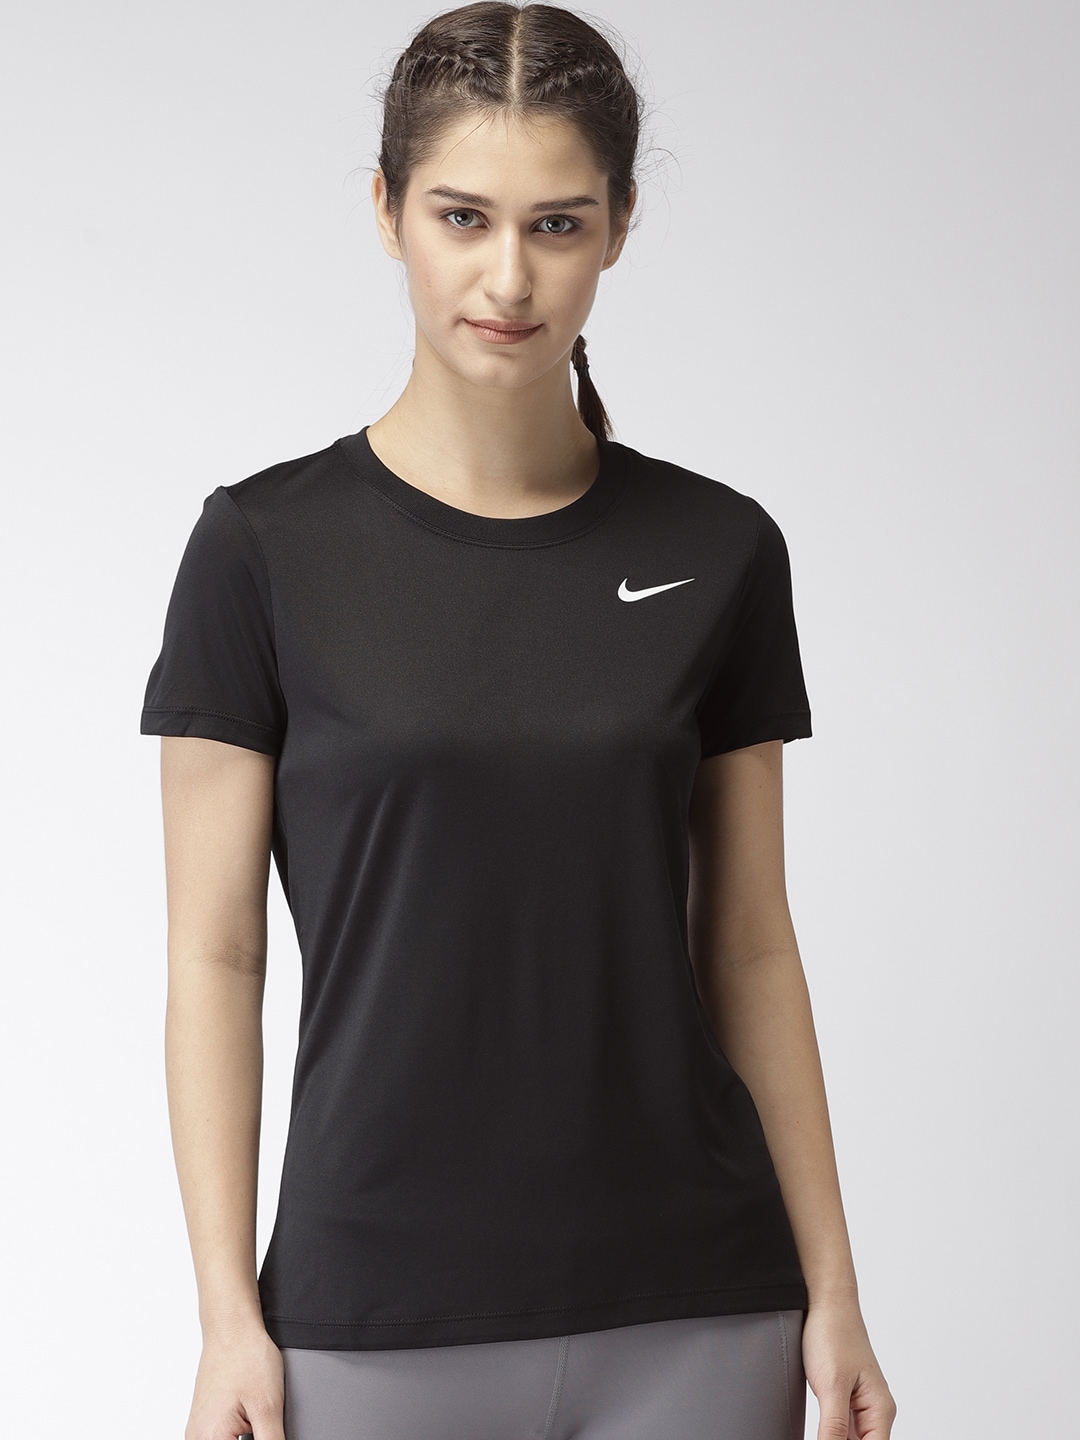 Nike Women Black Standard Fit DRY LEG CREW DRI-FIT T-shirt Price in India